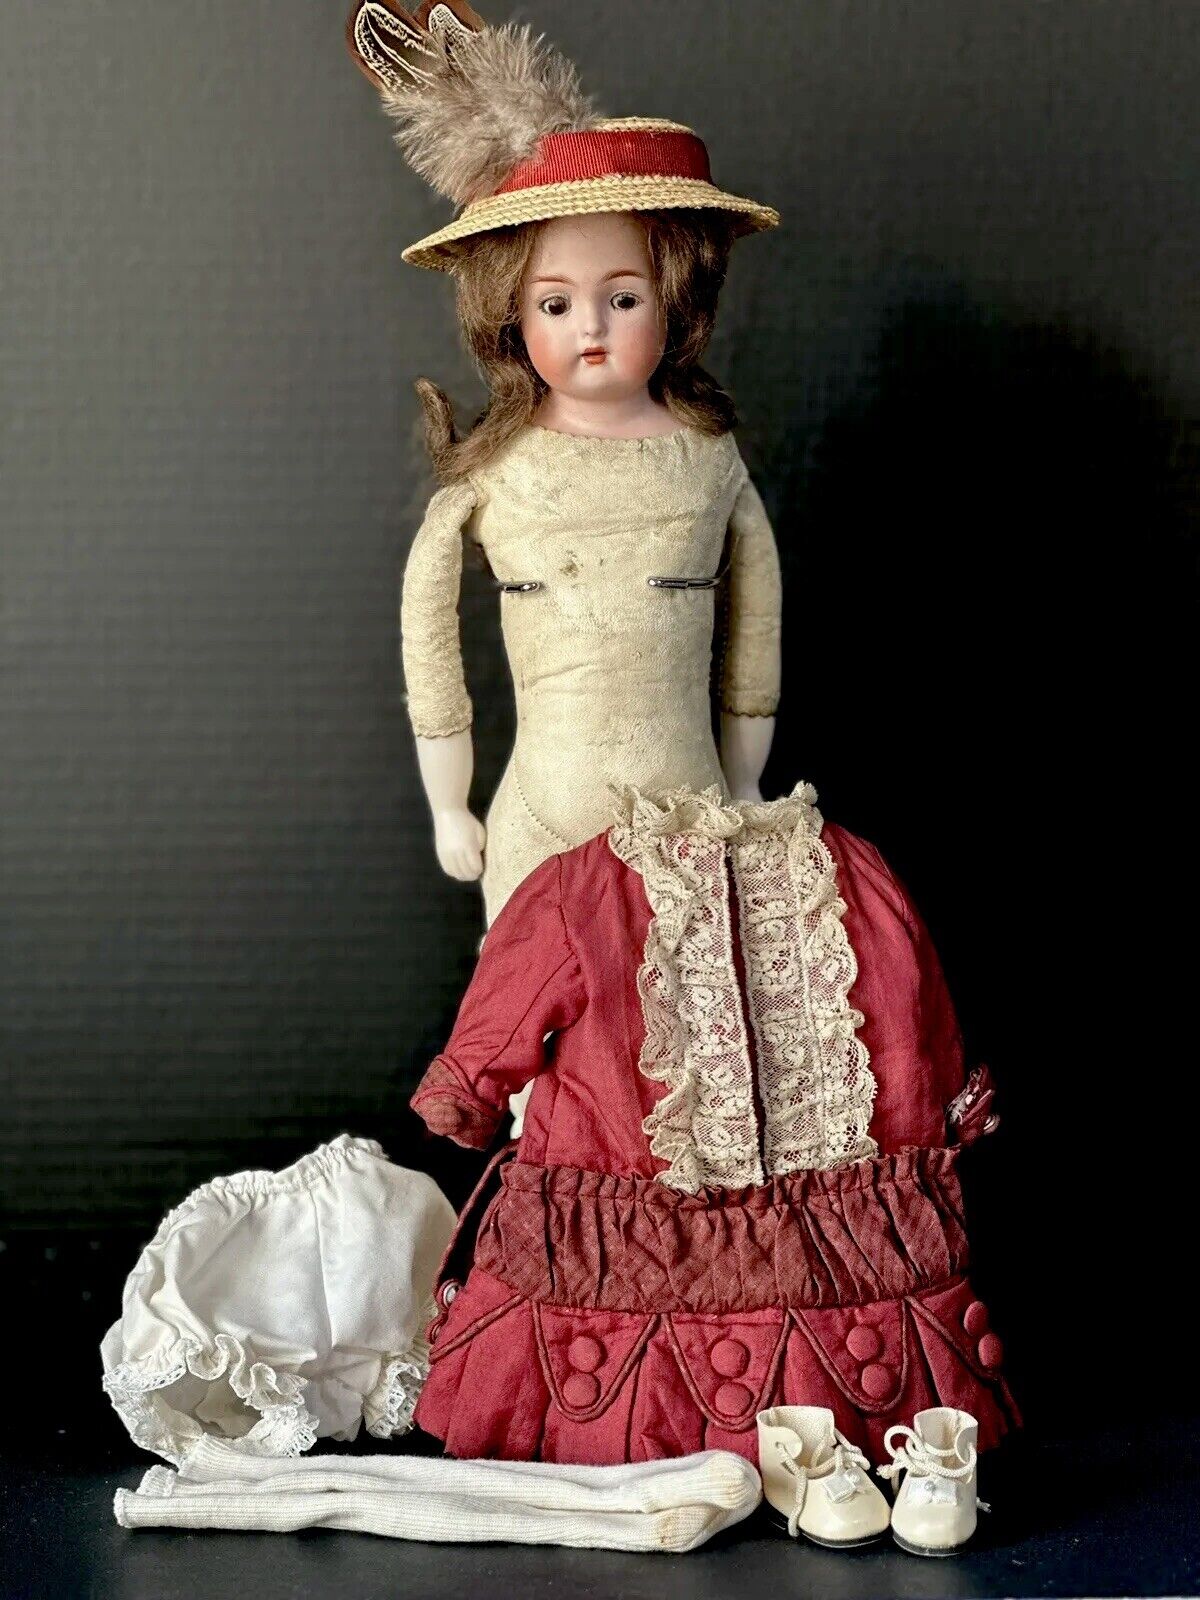 Antique German Kammer & Reinhardt Mold 245 (?) Bisque Shoulder Head 14” Doll